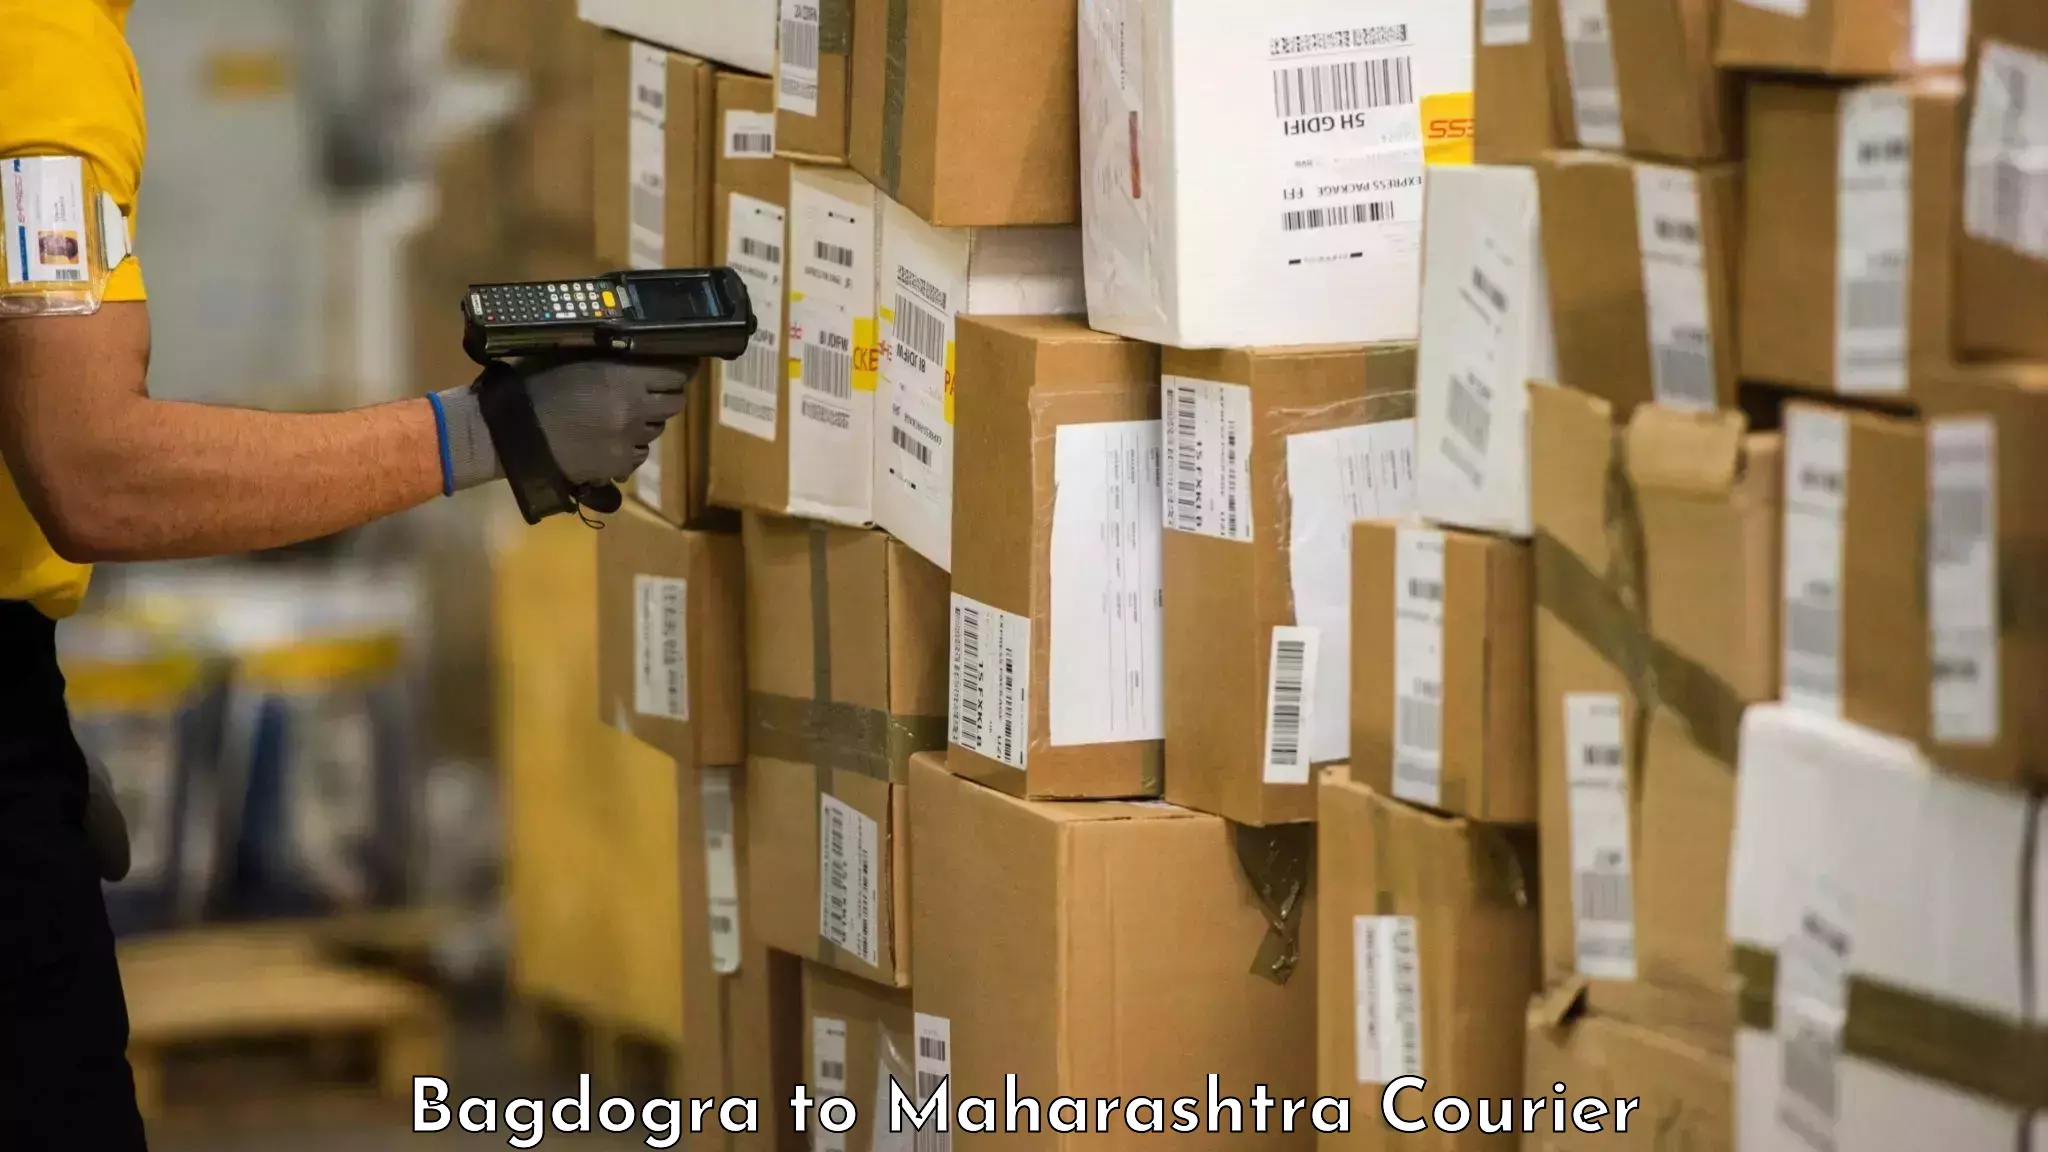 Baggage shipping experience Bagdogra to Andheri